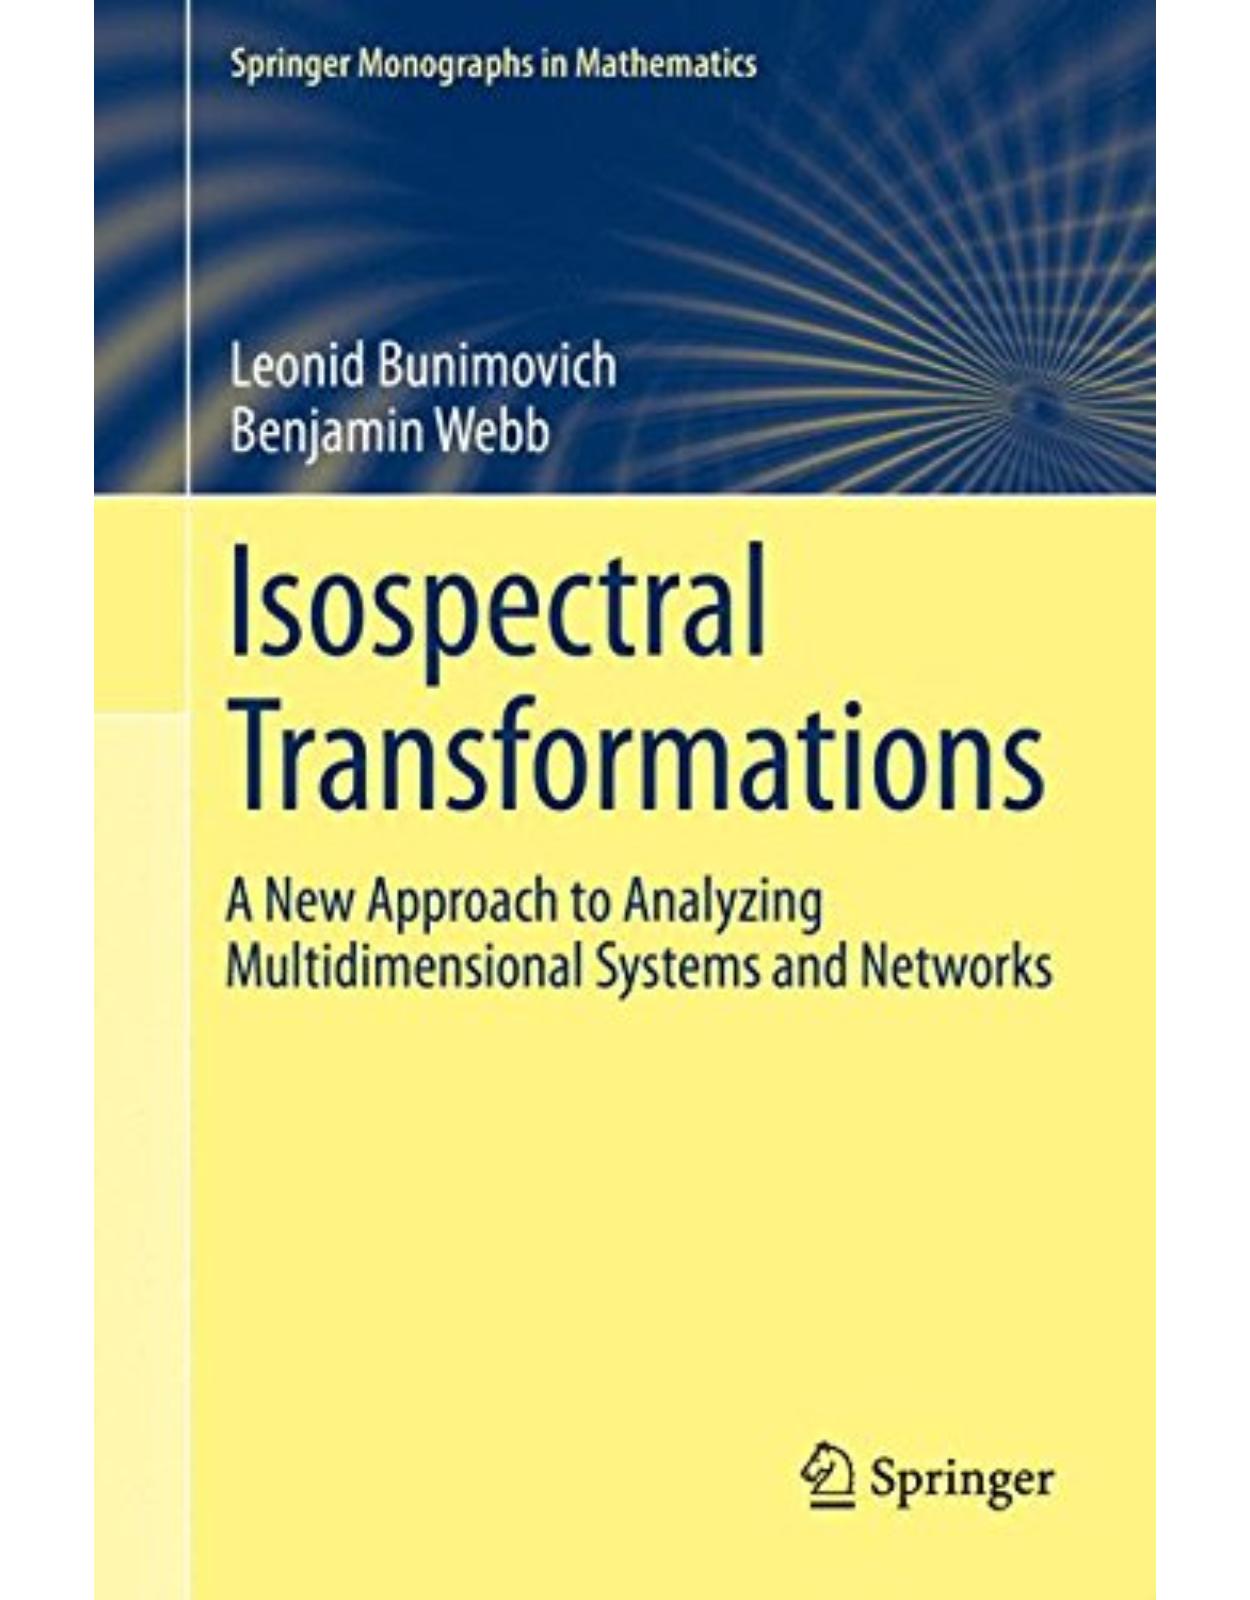 Isospectral Transformations